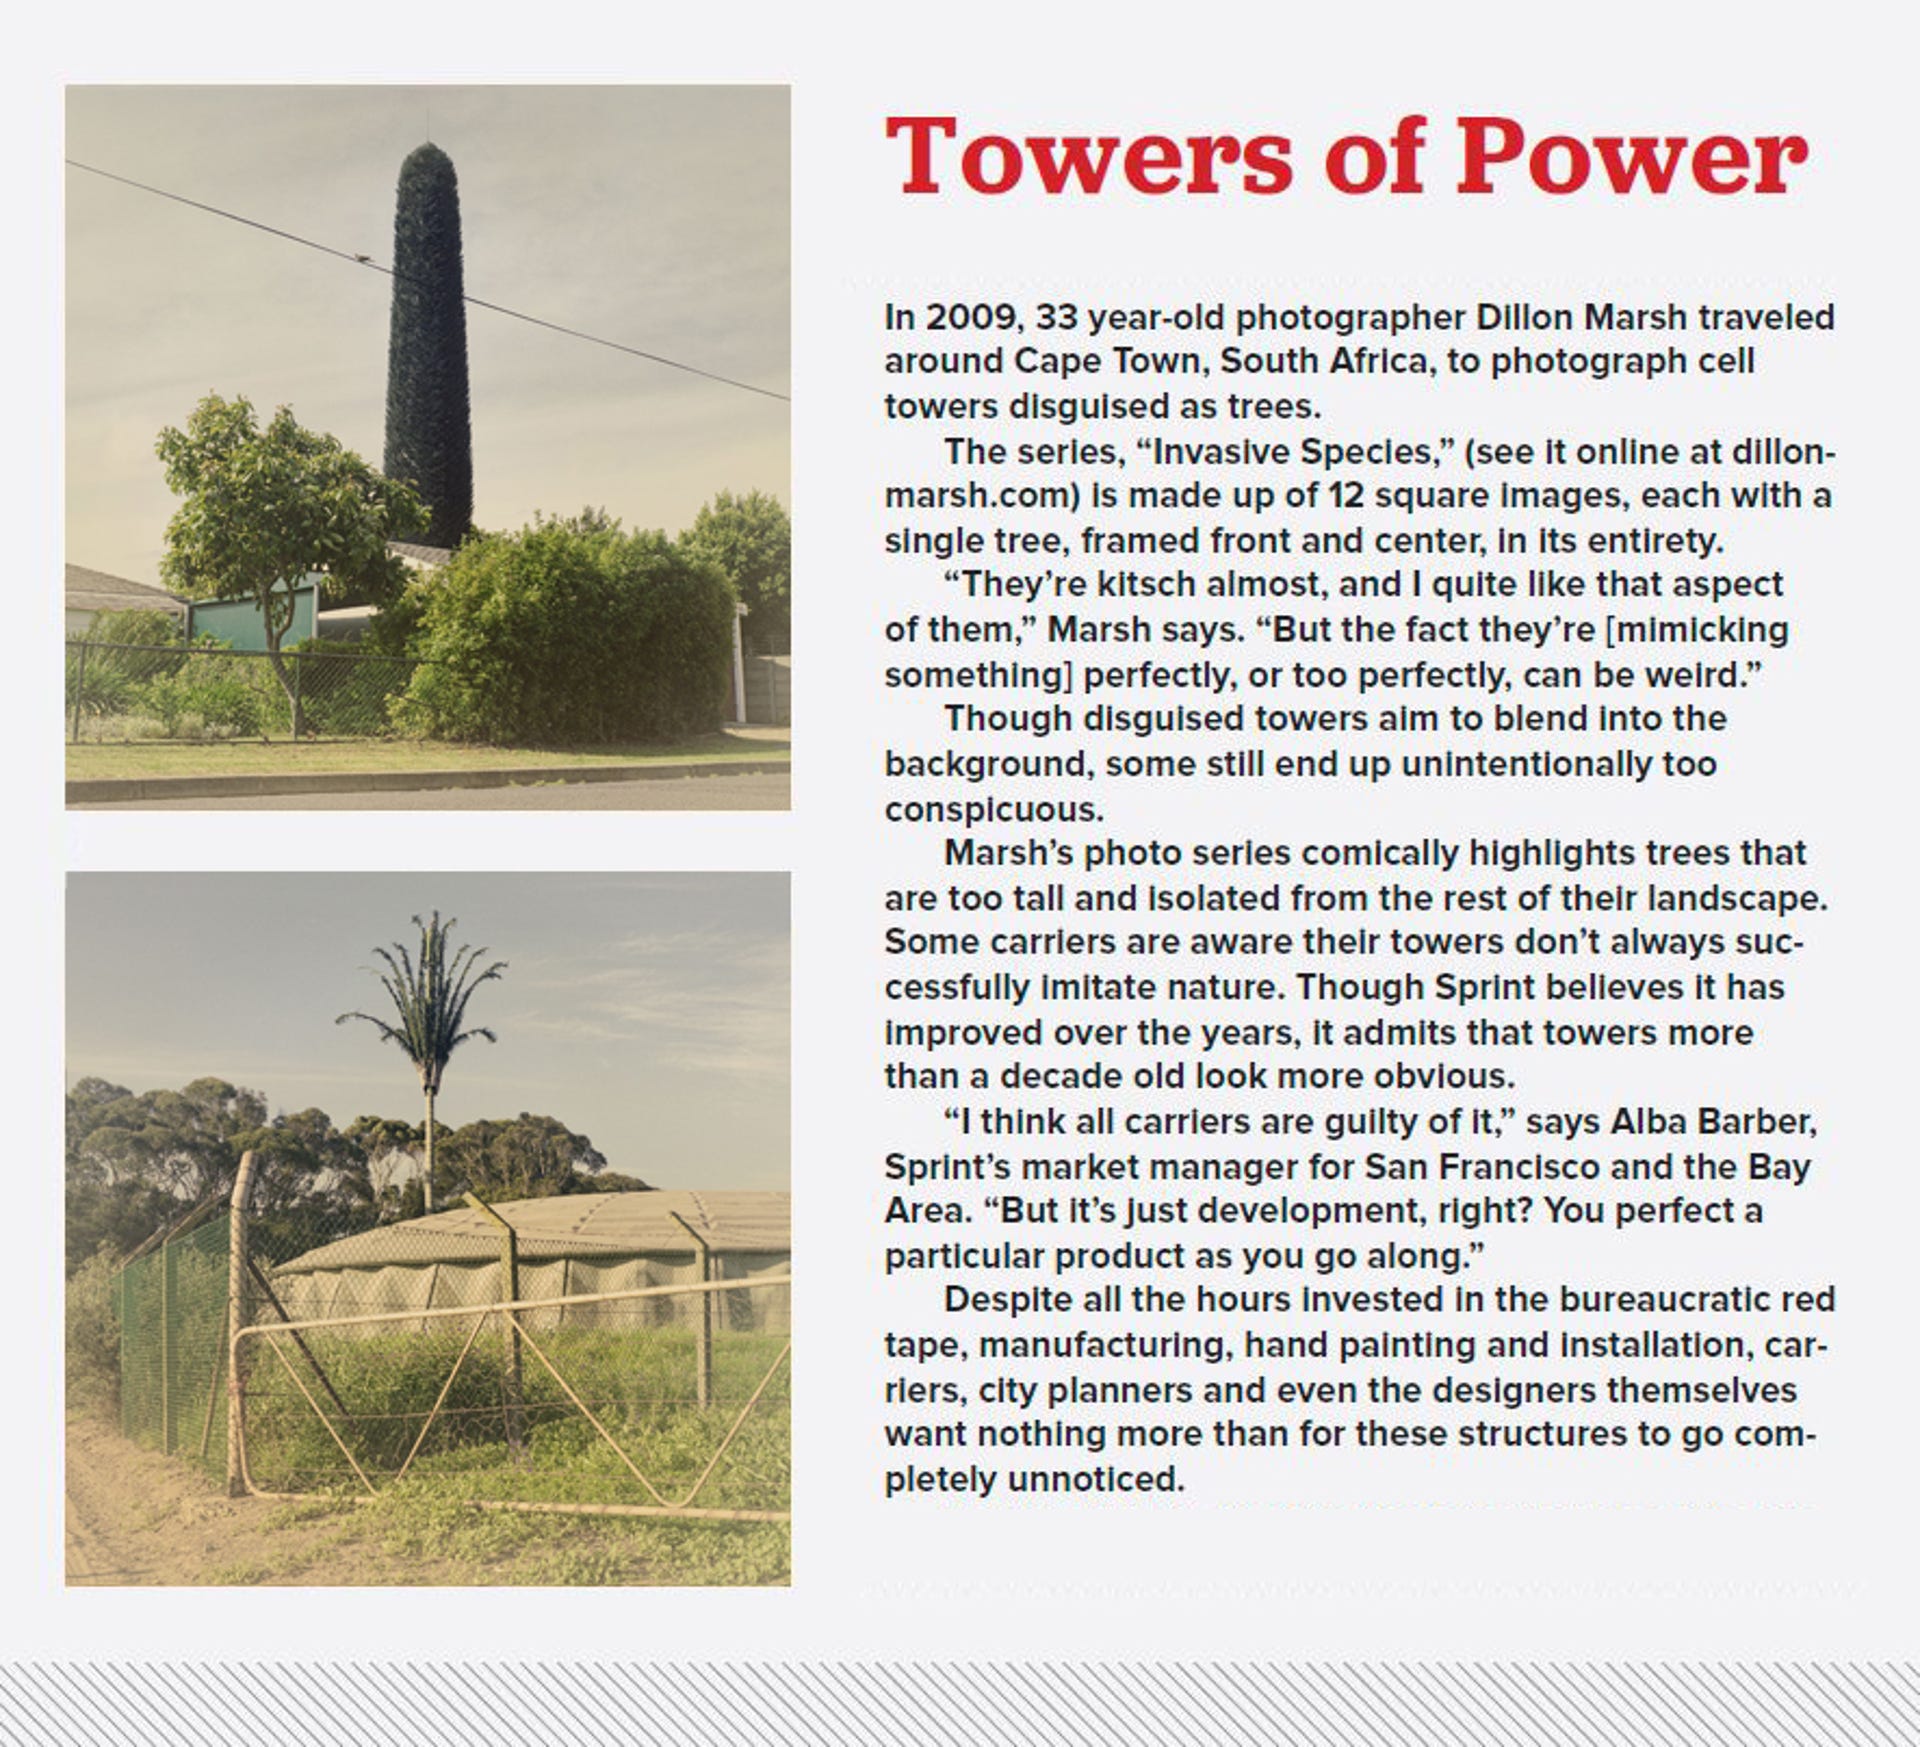 towers-of-power-sidebar.jpg